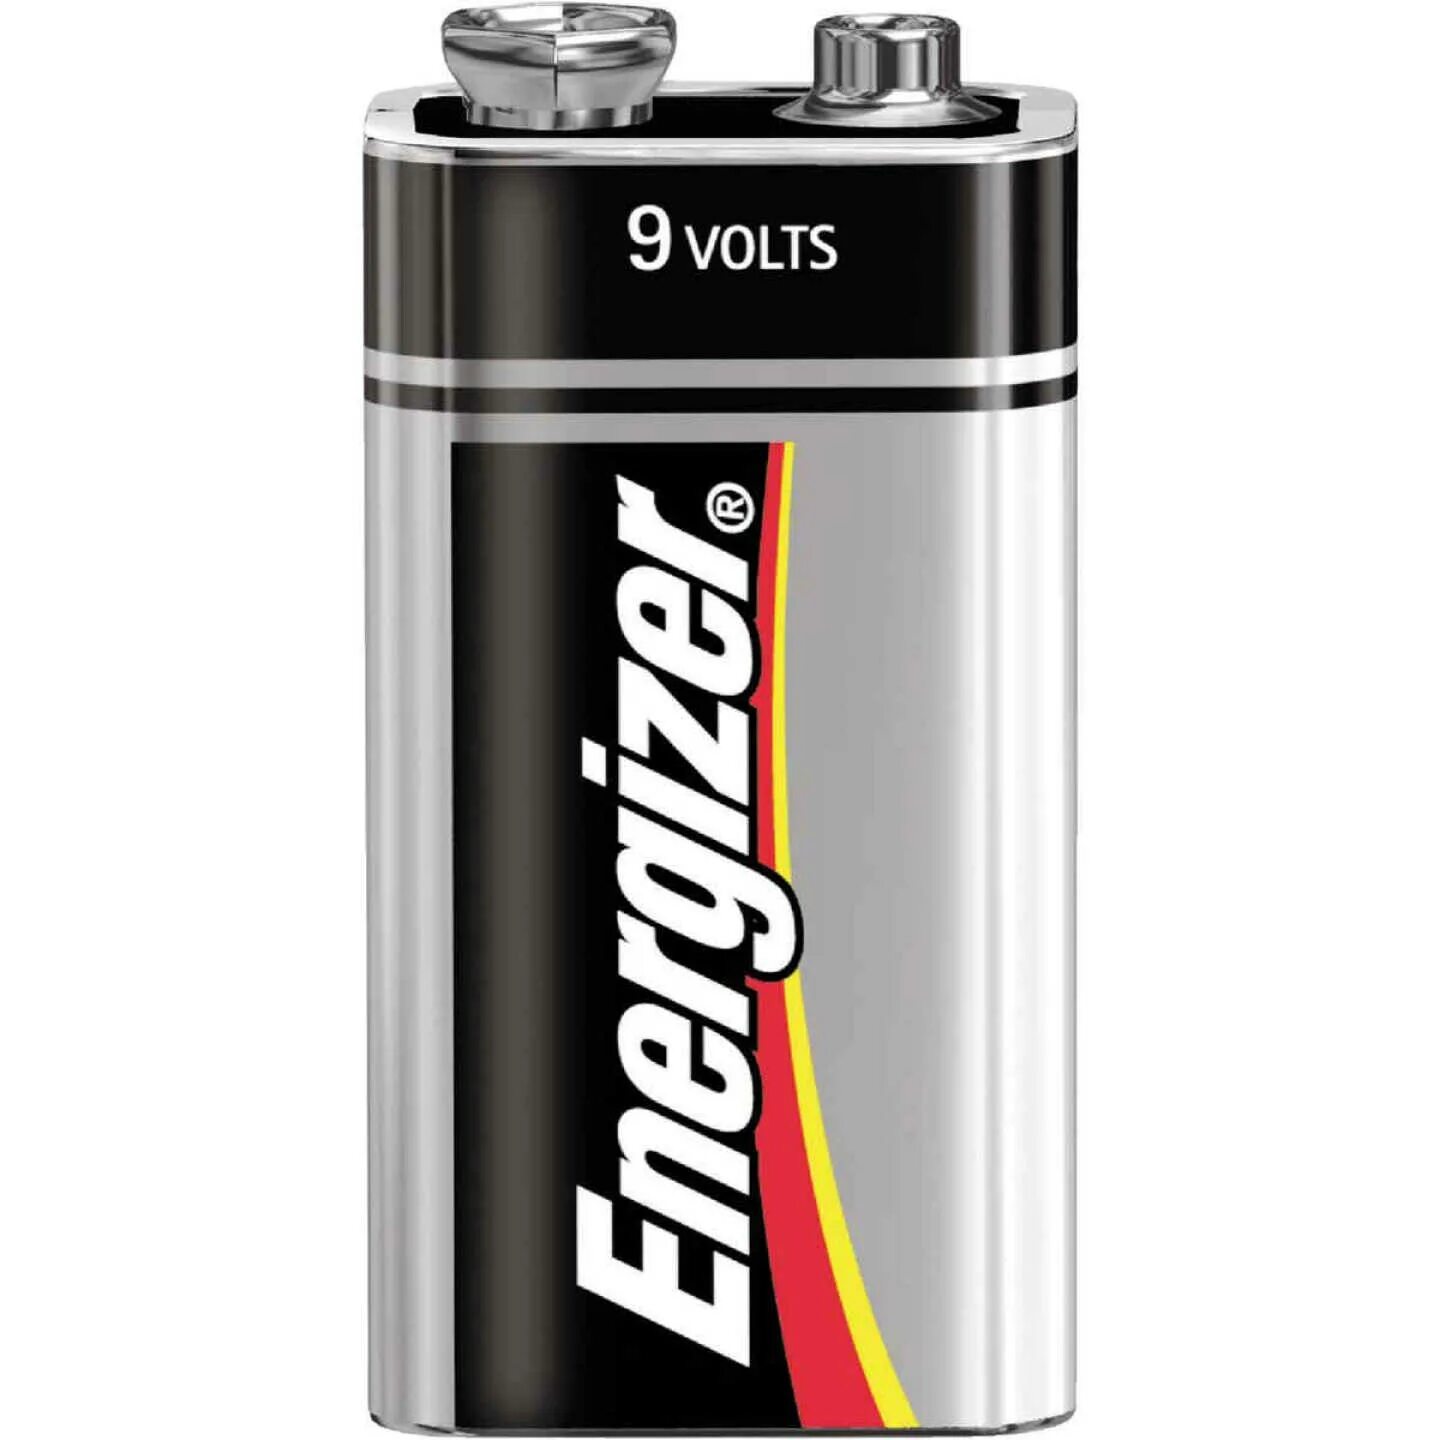 Battery 9. Батарейка 9v Energizer 522 6lr61. Батарейка Energizer 9v крона. Energizer батарейки 9v. Батарейка 6lr61 крона Energizer алкалиновые.